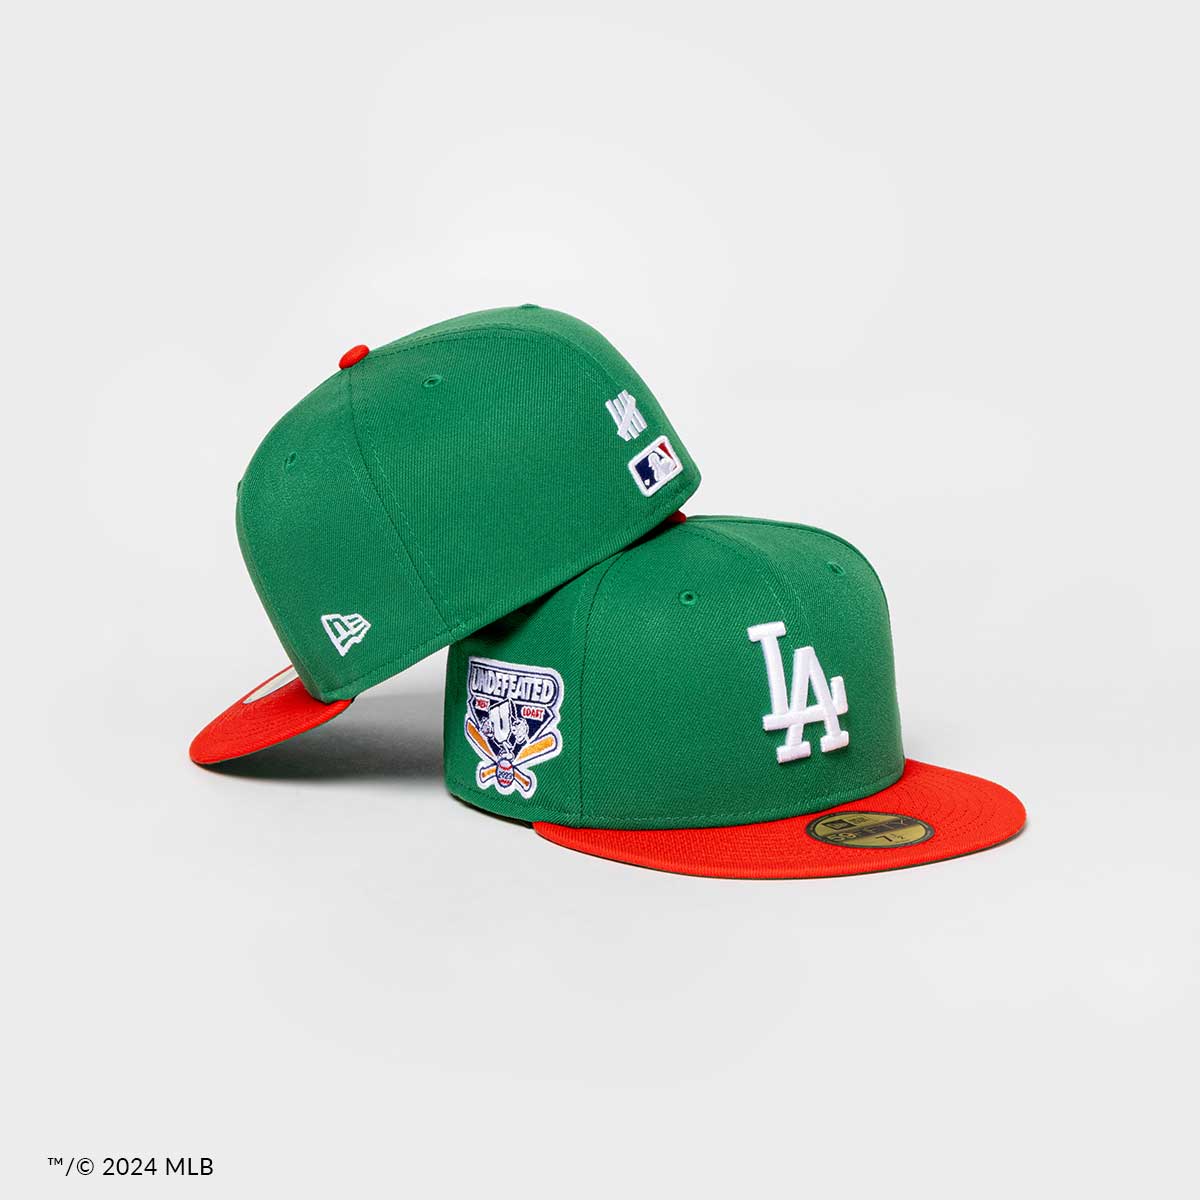 Undefeated X Los Angeles Dodgers – New Era Cap